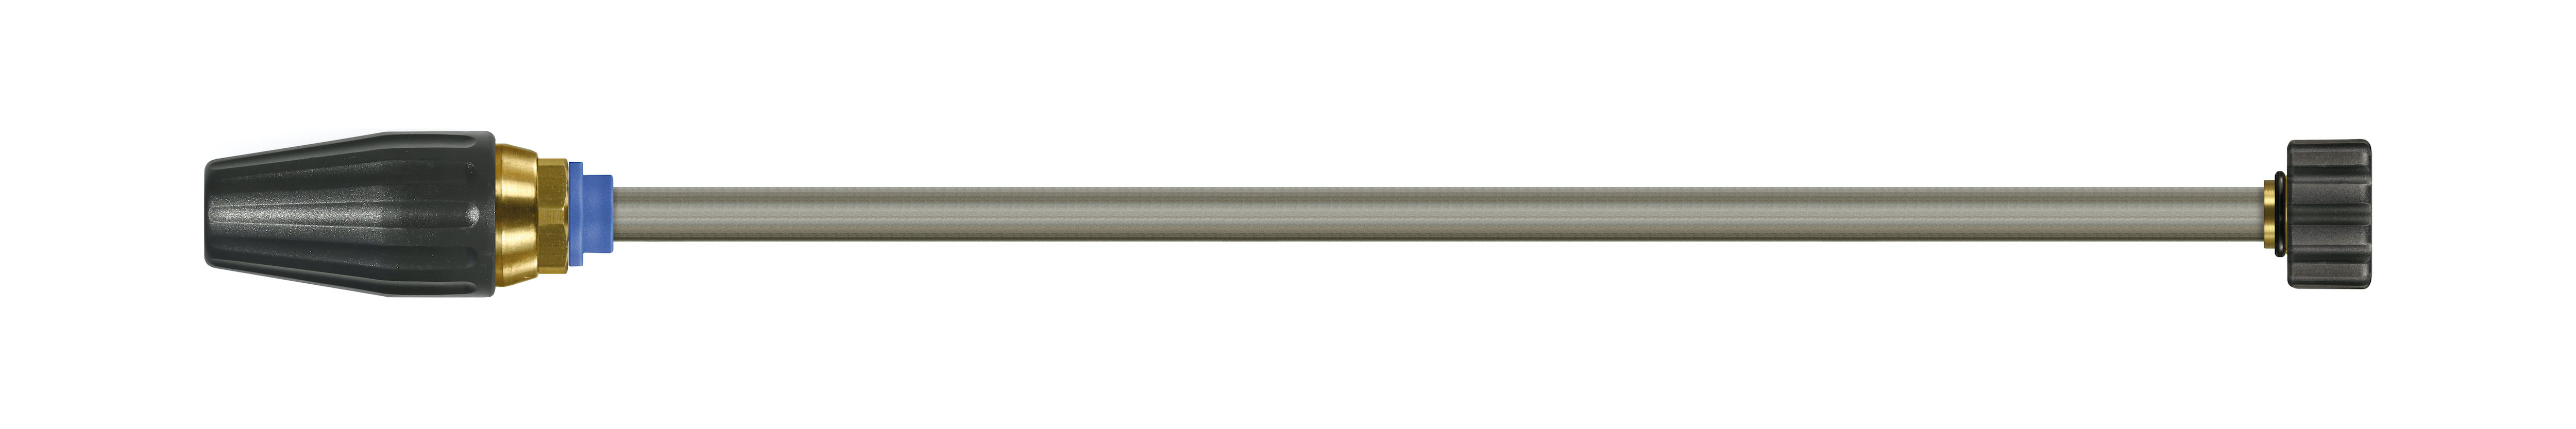 Rotabuse céramique avec lance 430mm, 100-250 bar, Calibre 050.